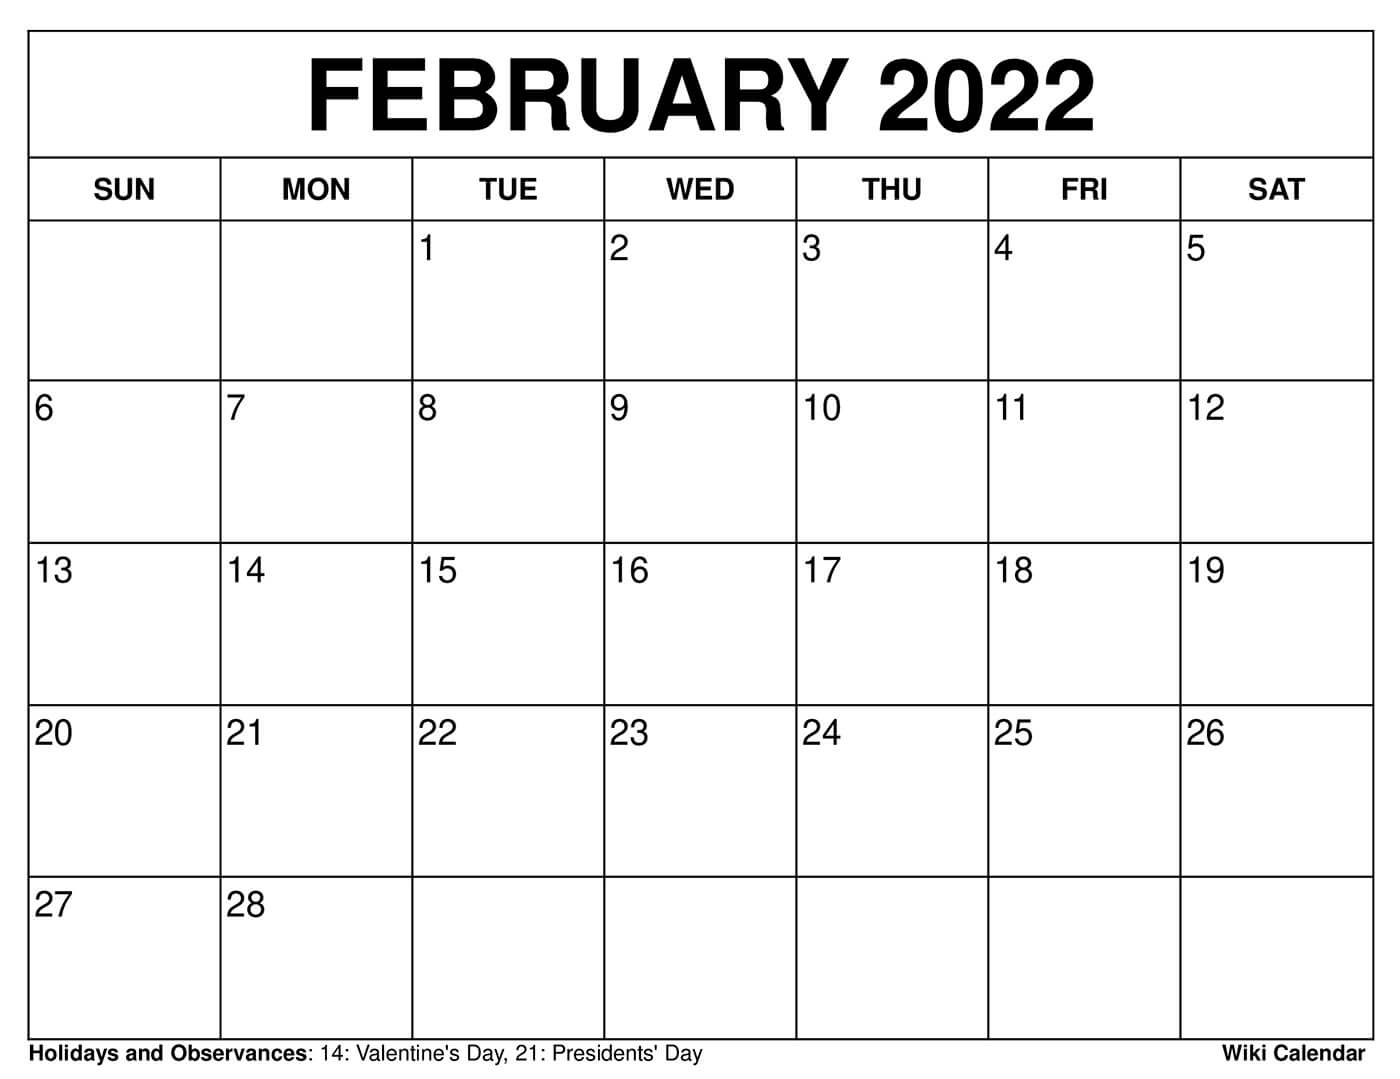 February Calendar 2022 With Holidays Free Printable February 2022 Calendars - Wiki Calendar